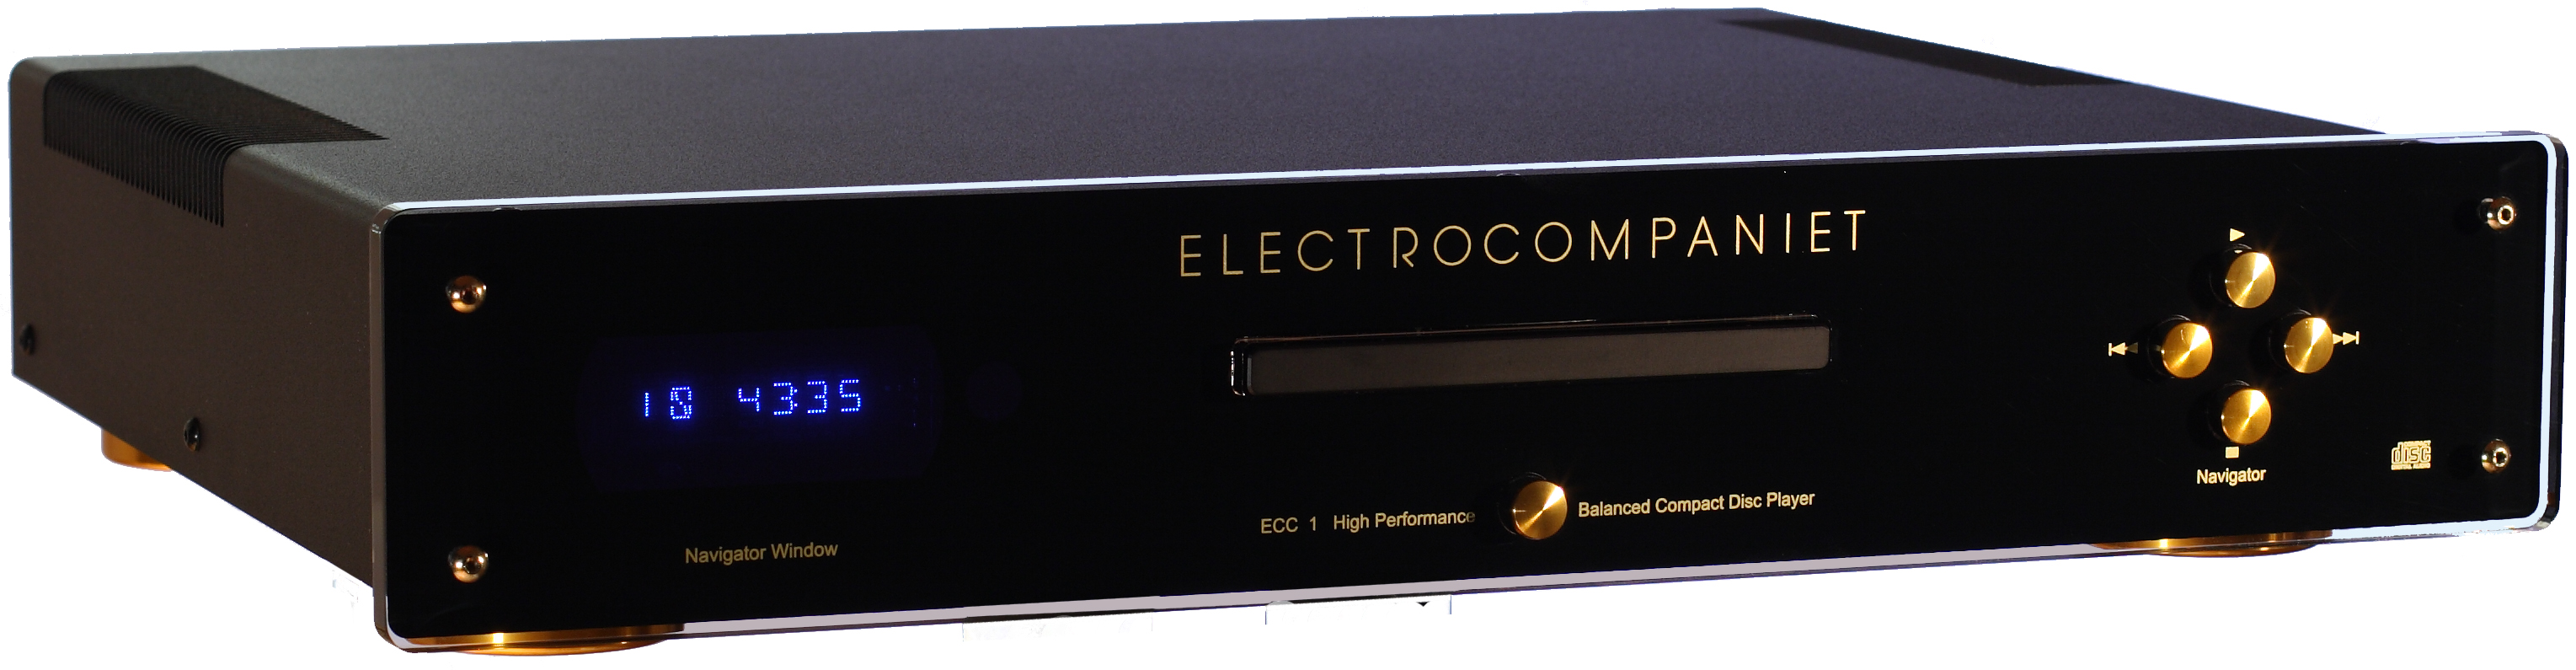 Der Thronräuber - ELECTROCOMPANIET ECC-1